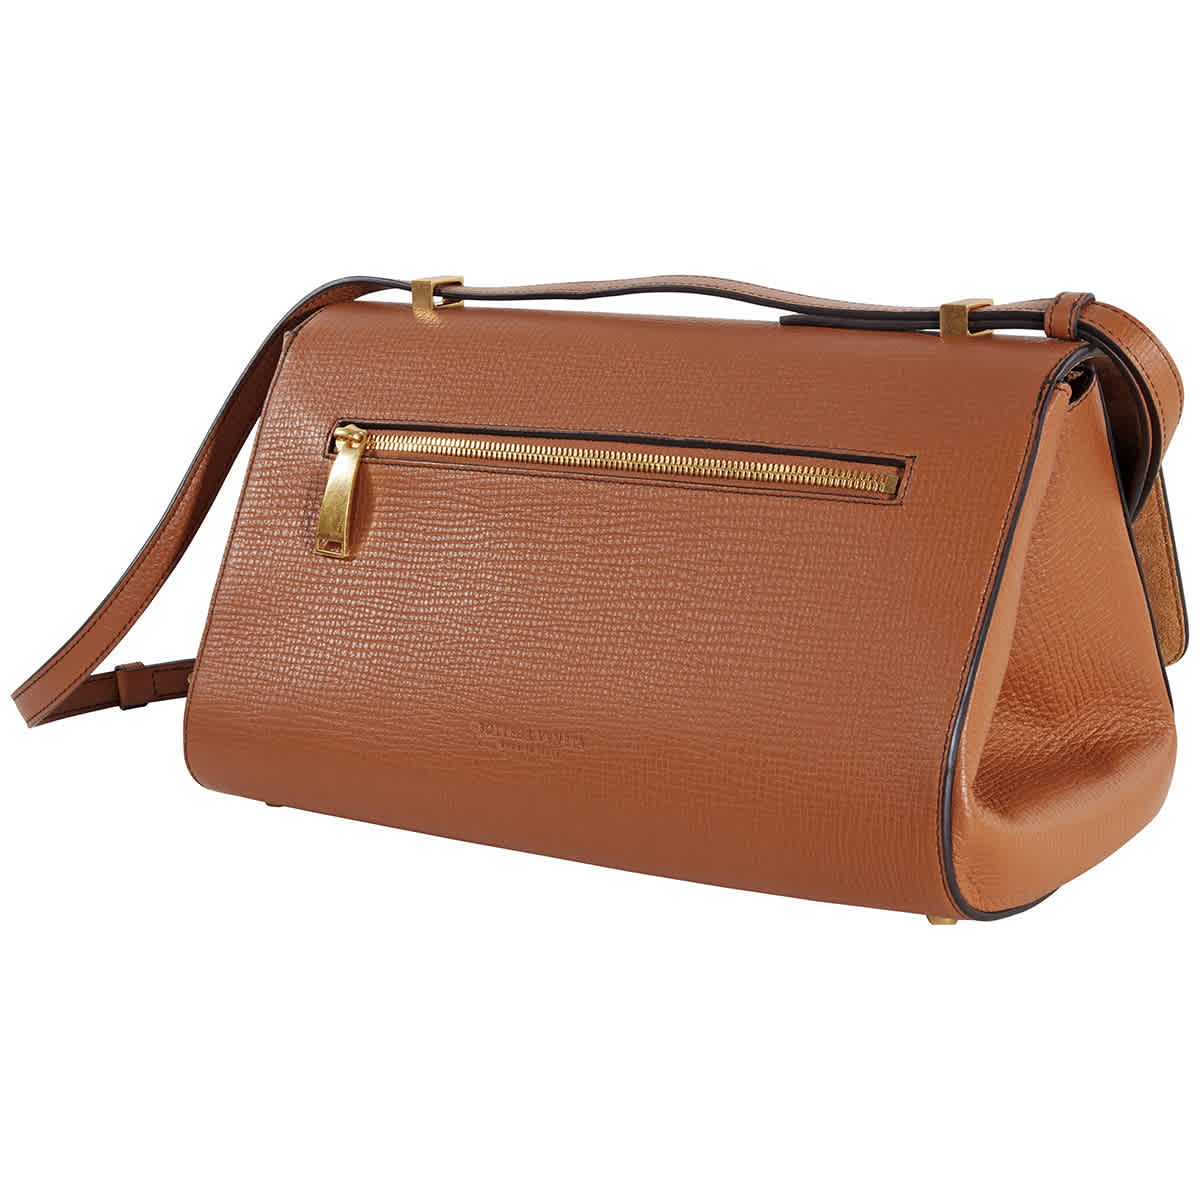 Bottega Veneta Bv Angle Trapezoidal Shoulder Bag Bag In Brown,gold Tone